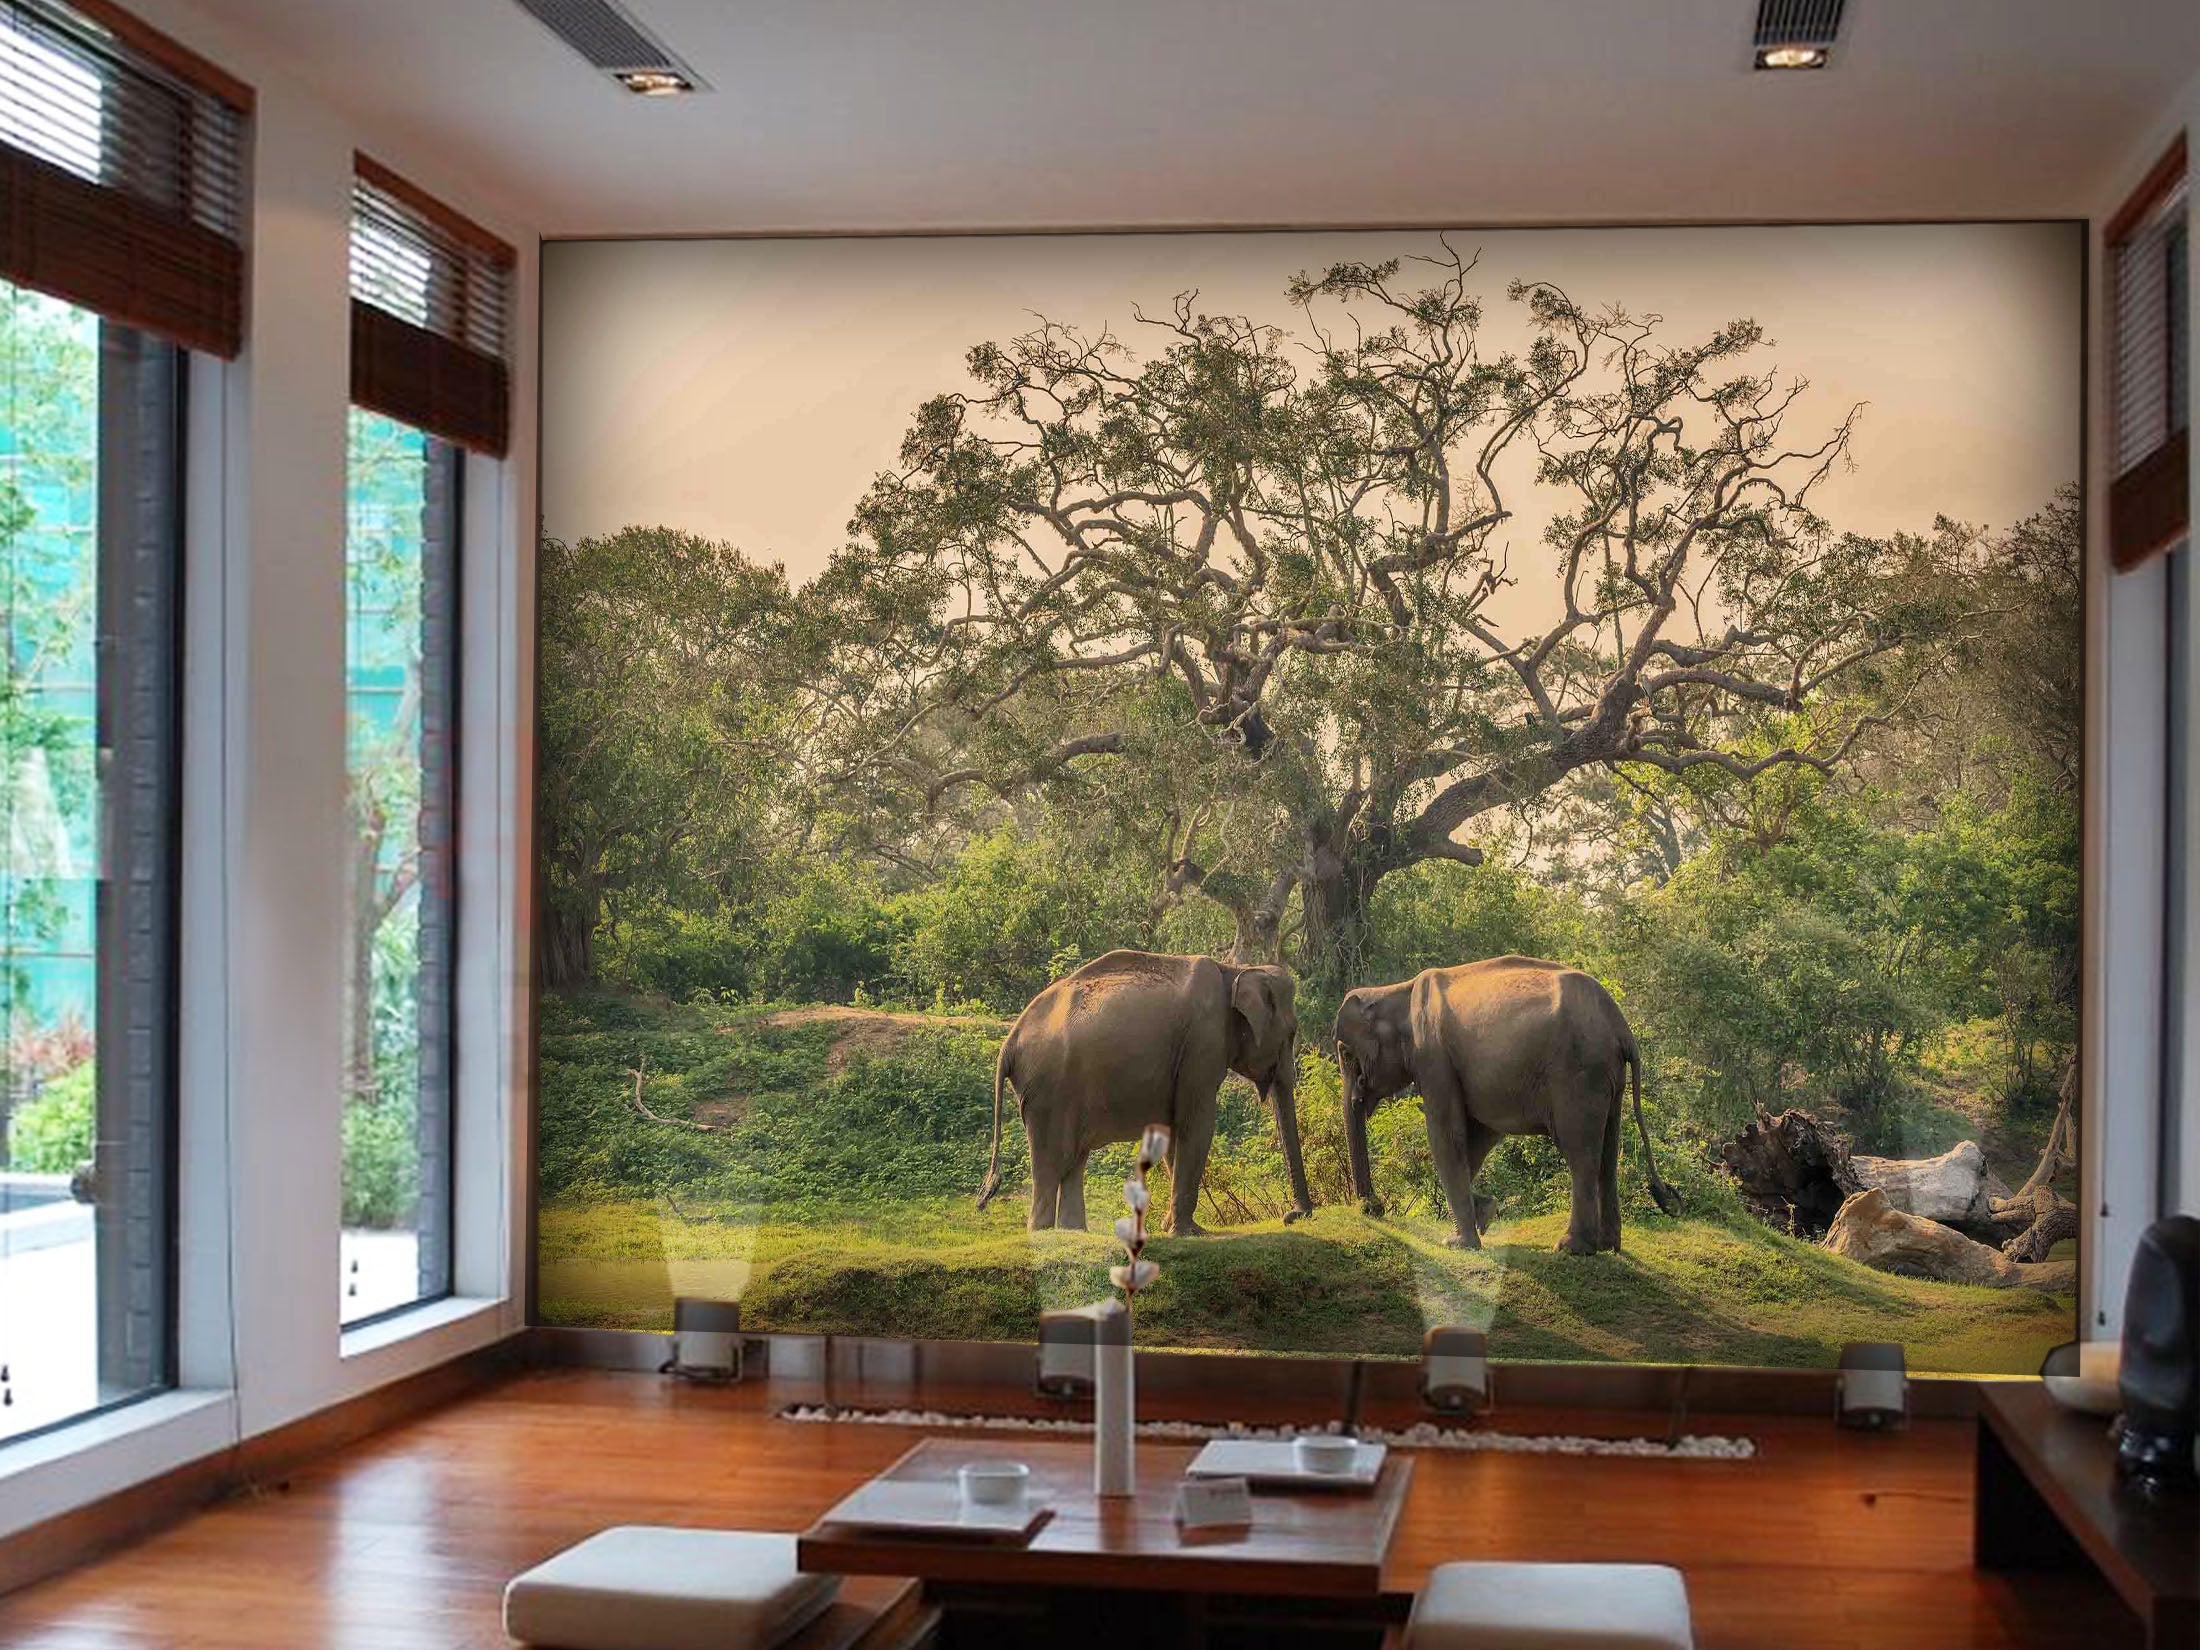 3D Elephant Family 1058 Wall Murals